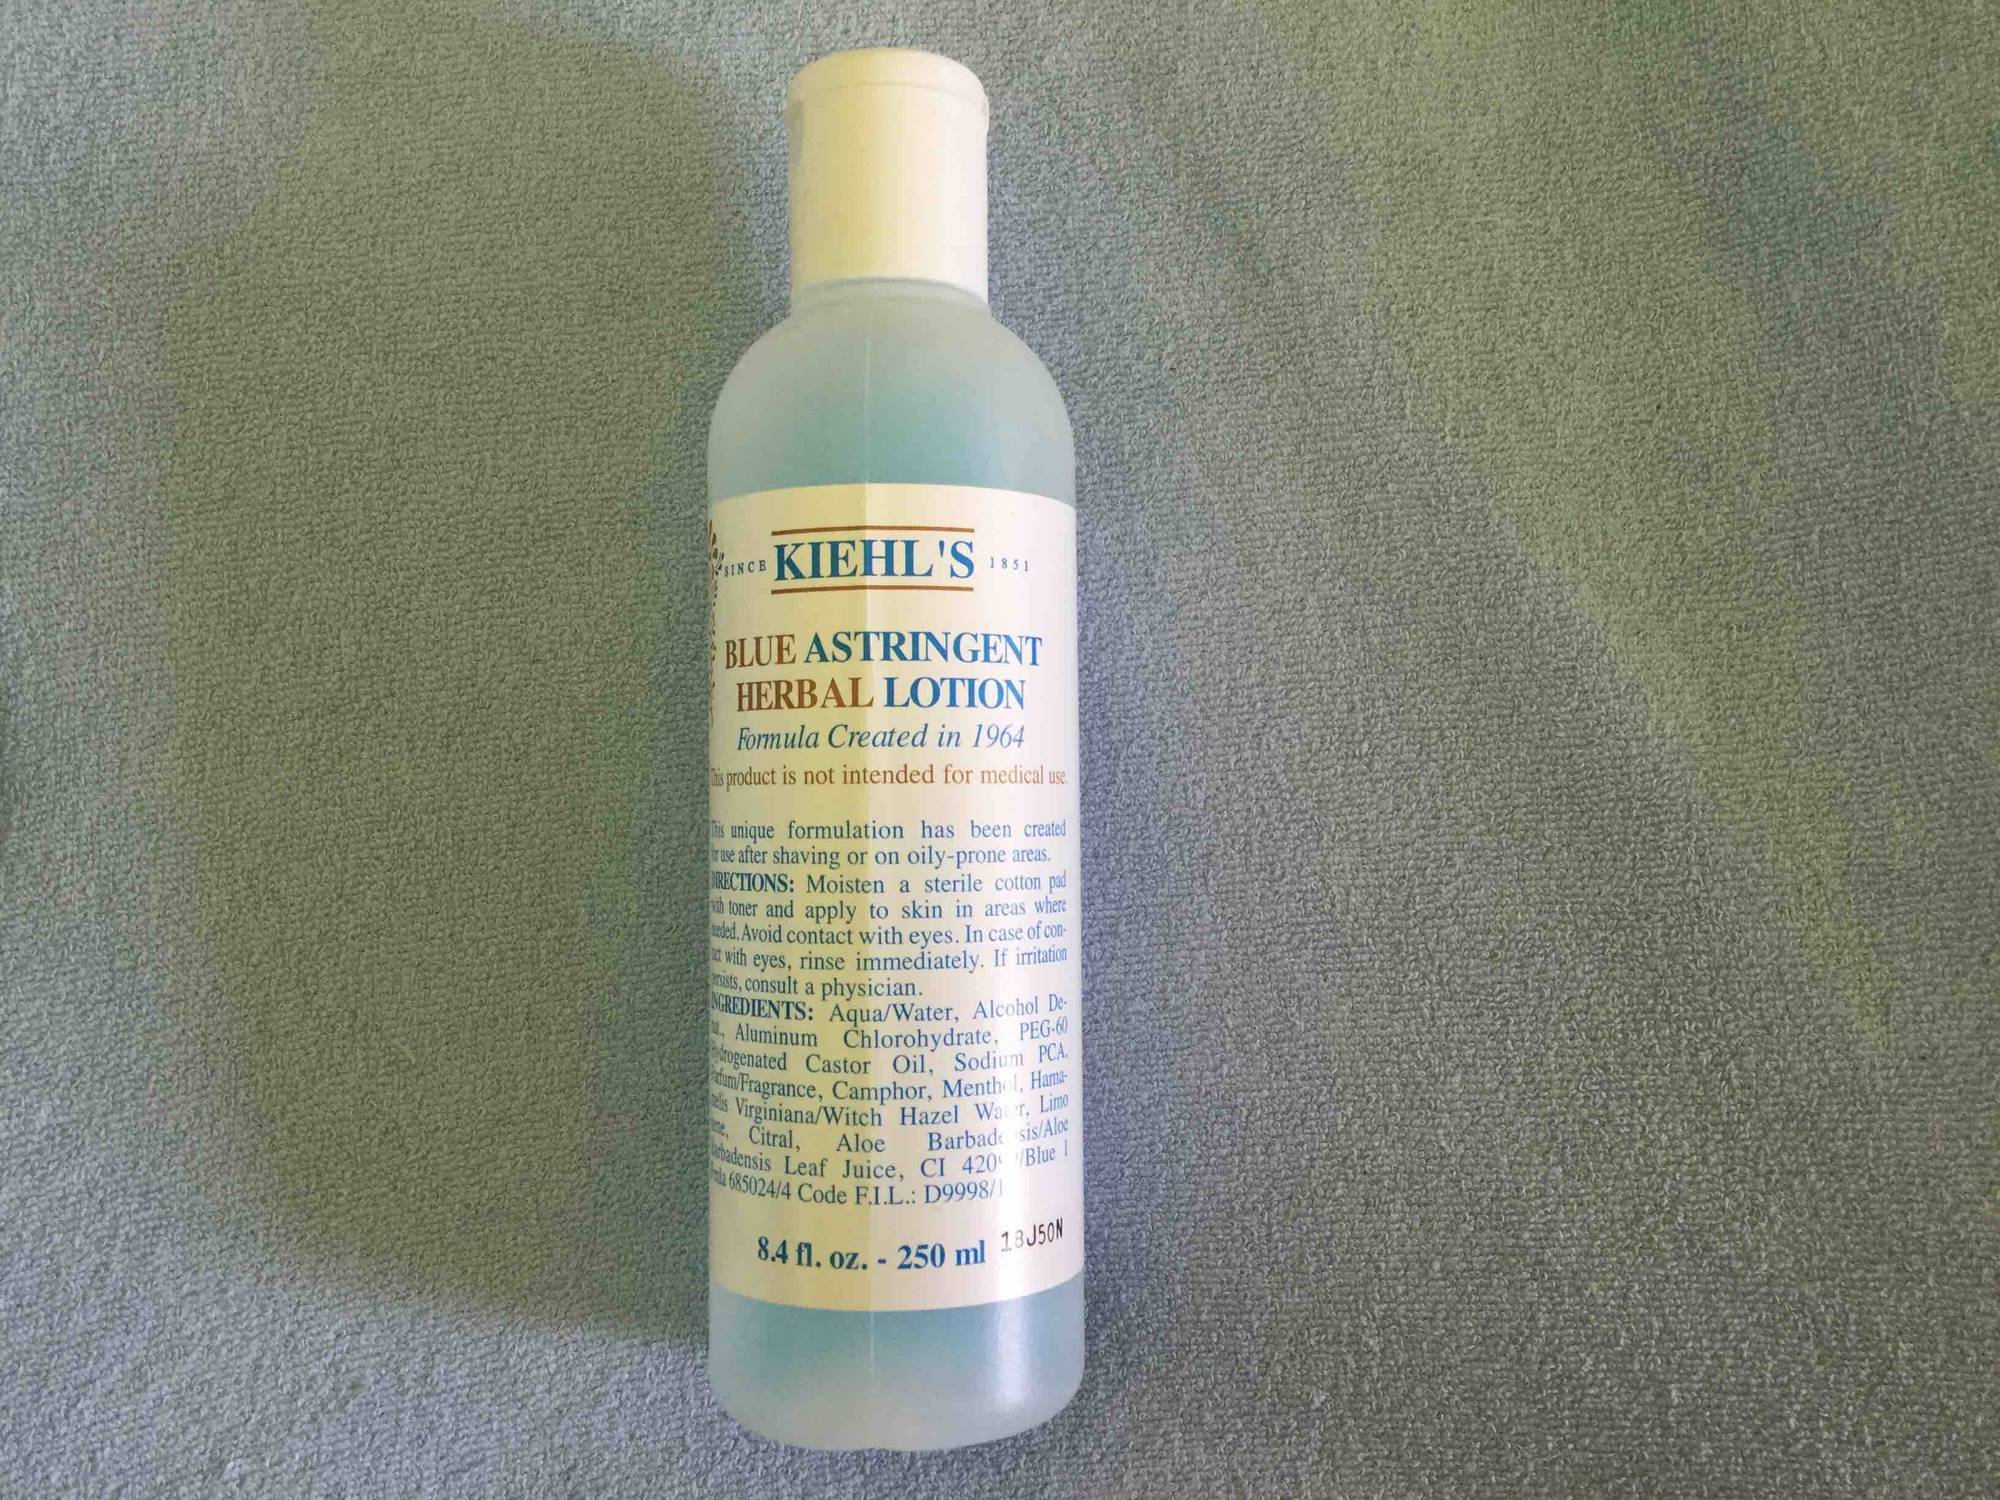 KIEHL'S - Blue astringent - Herbal lotion